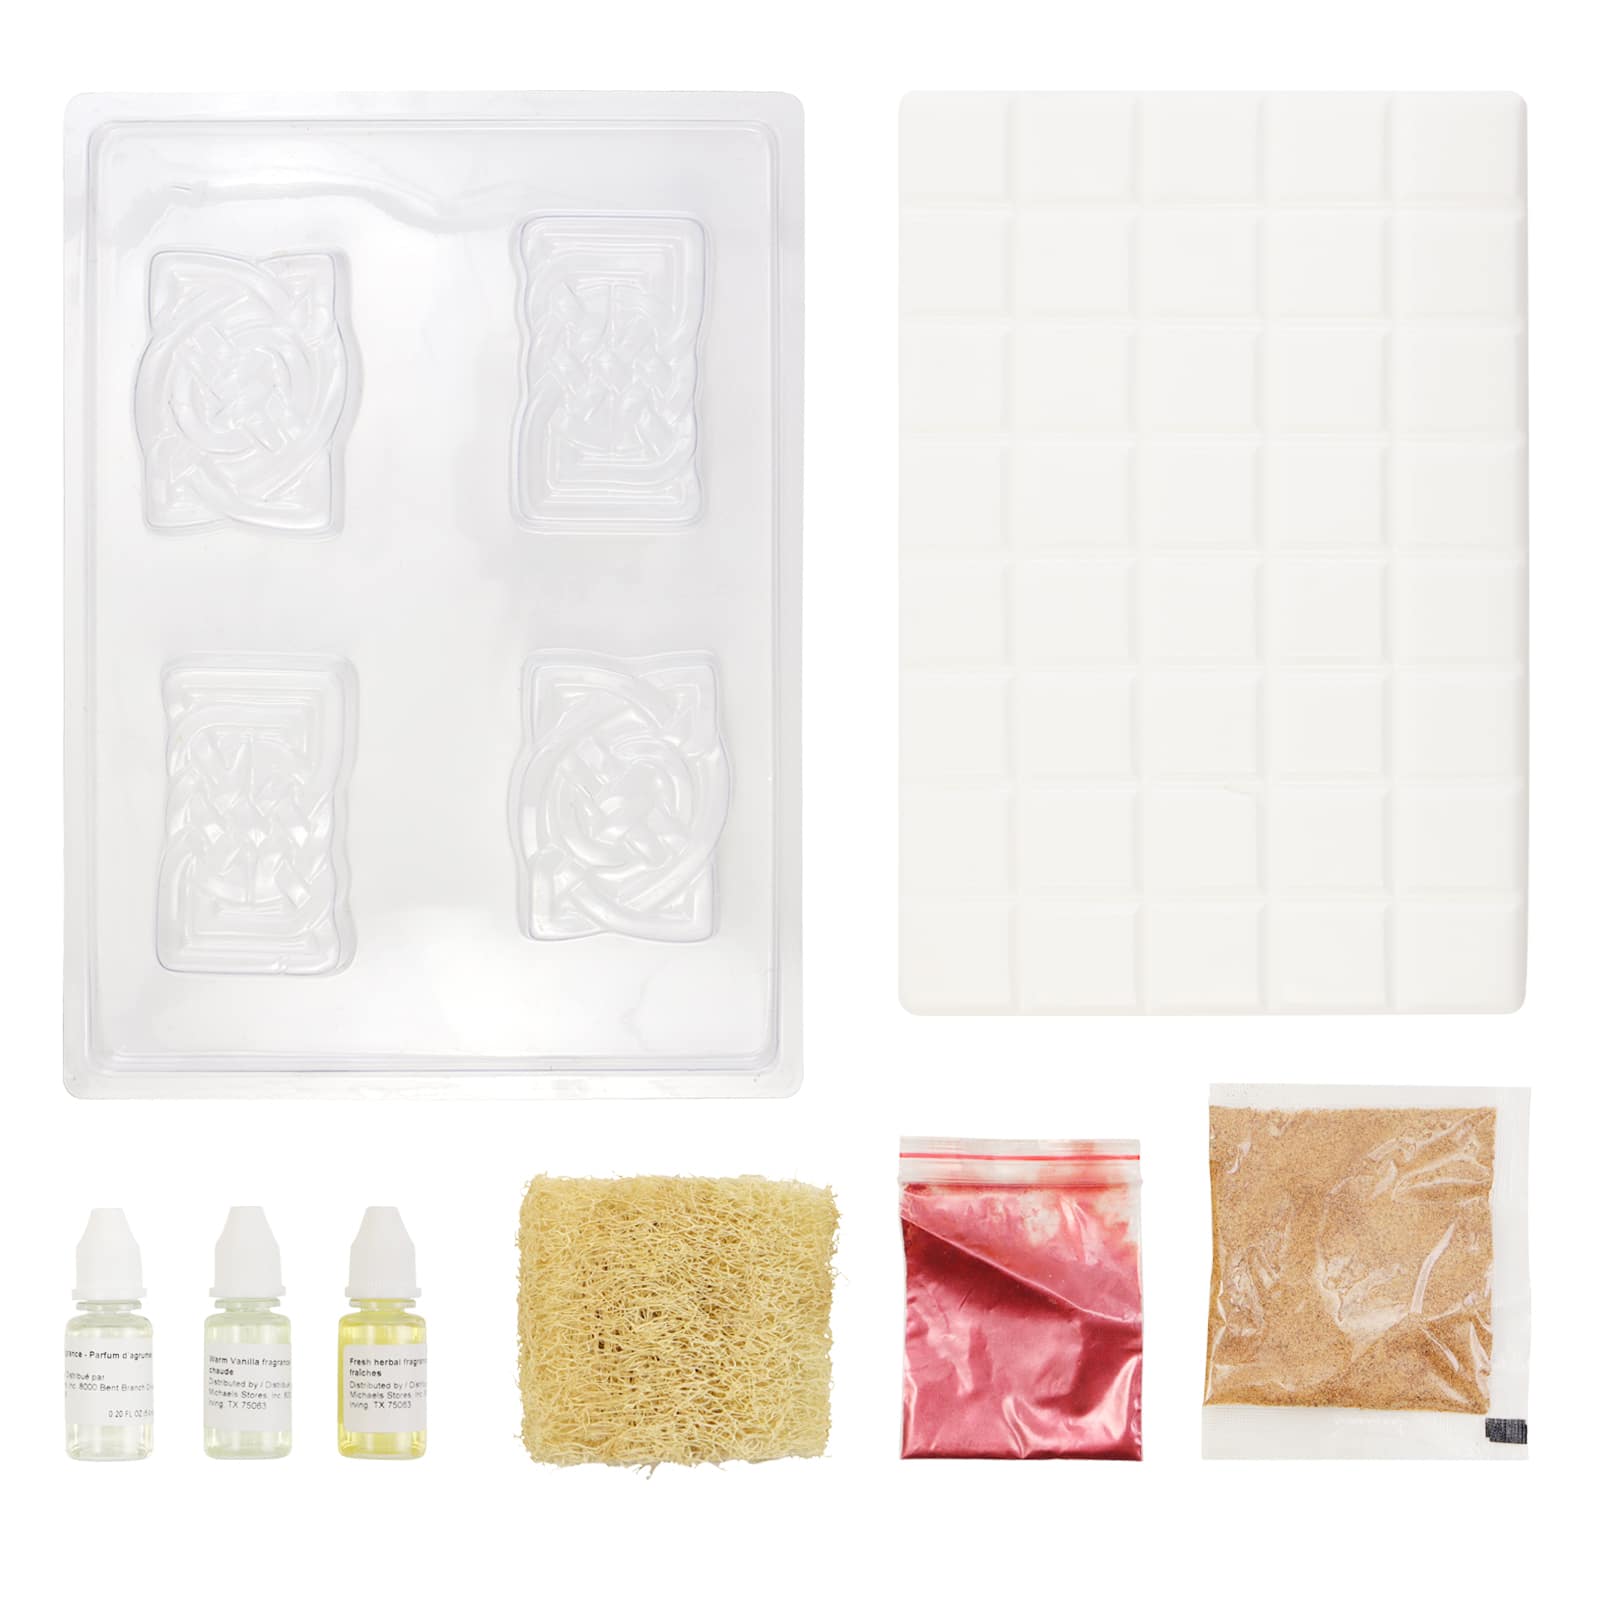 Soap Making Kits